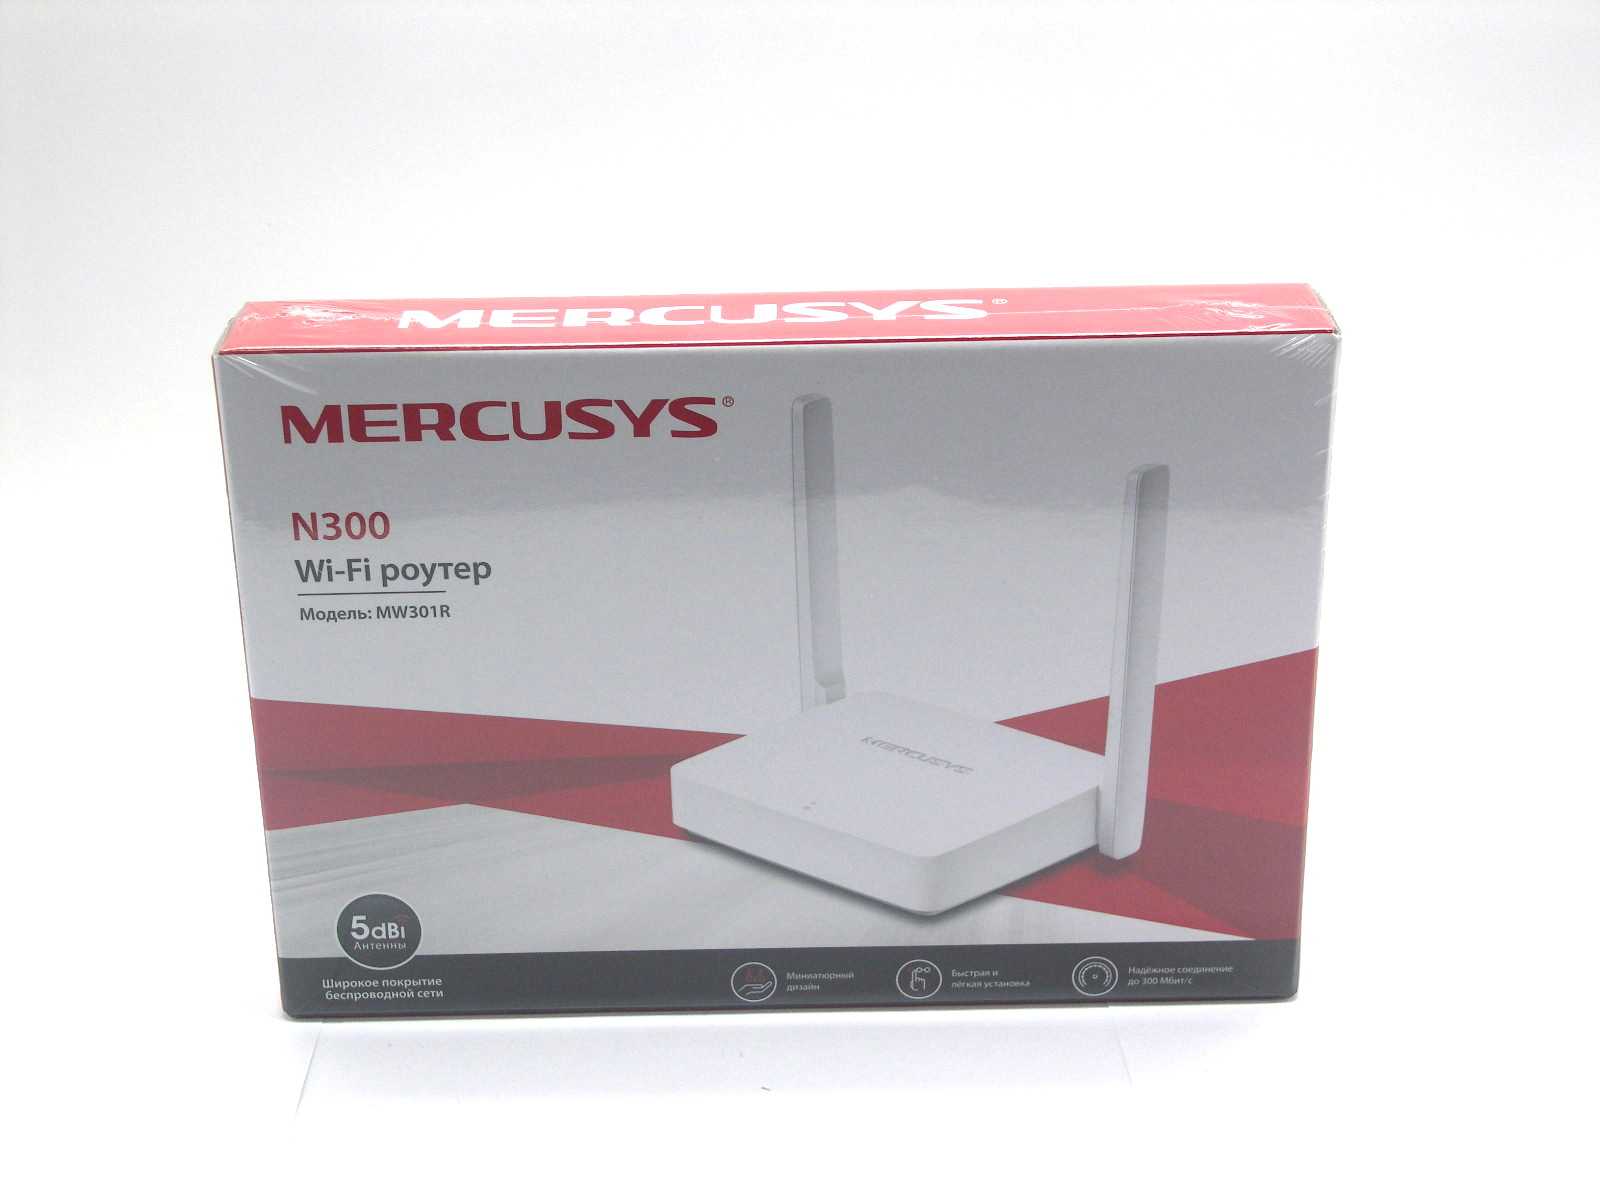 Mercusys support. Wi-Fi роутер Mercusys mw301r. Роутер Mercusys mw301r n300. Mercusys mw301r. Беспроводной маршрутизатор Wi-Fi роутер Mercusys n300 mw301r.